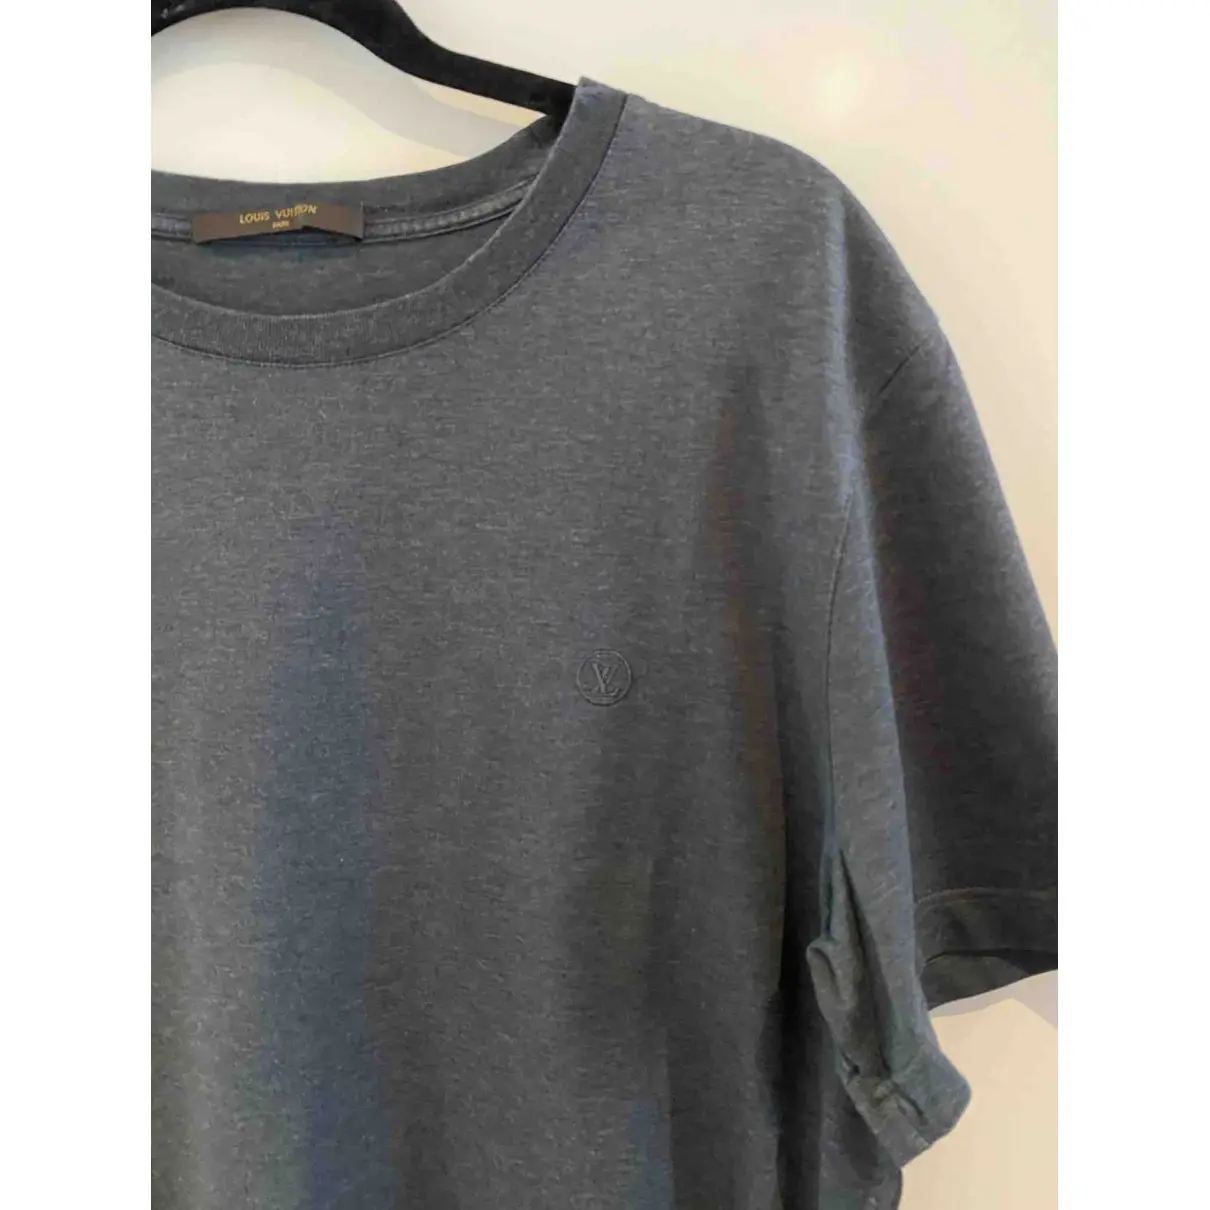 Buy Louis Vuitton Grey Cotton T-shirt online